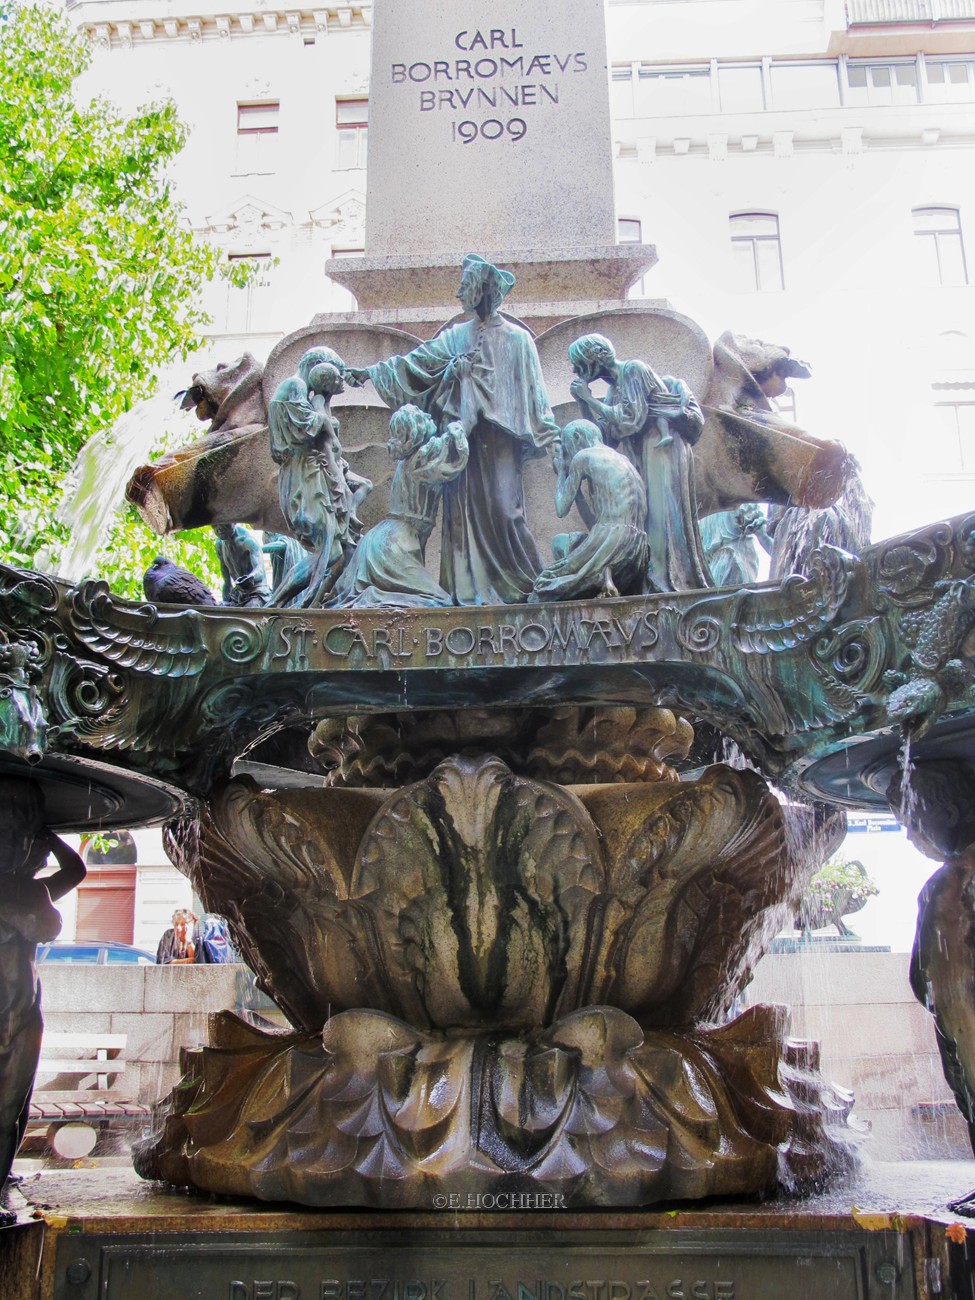 St. Carl Borromäus am Karl-Borromäus-Brunnen in Wien-Landstraße